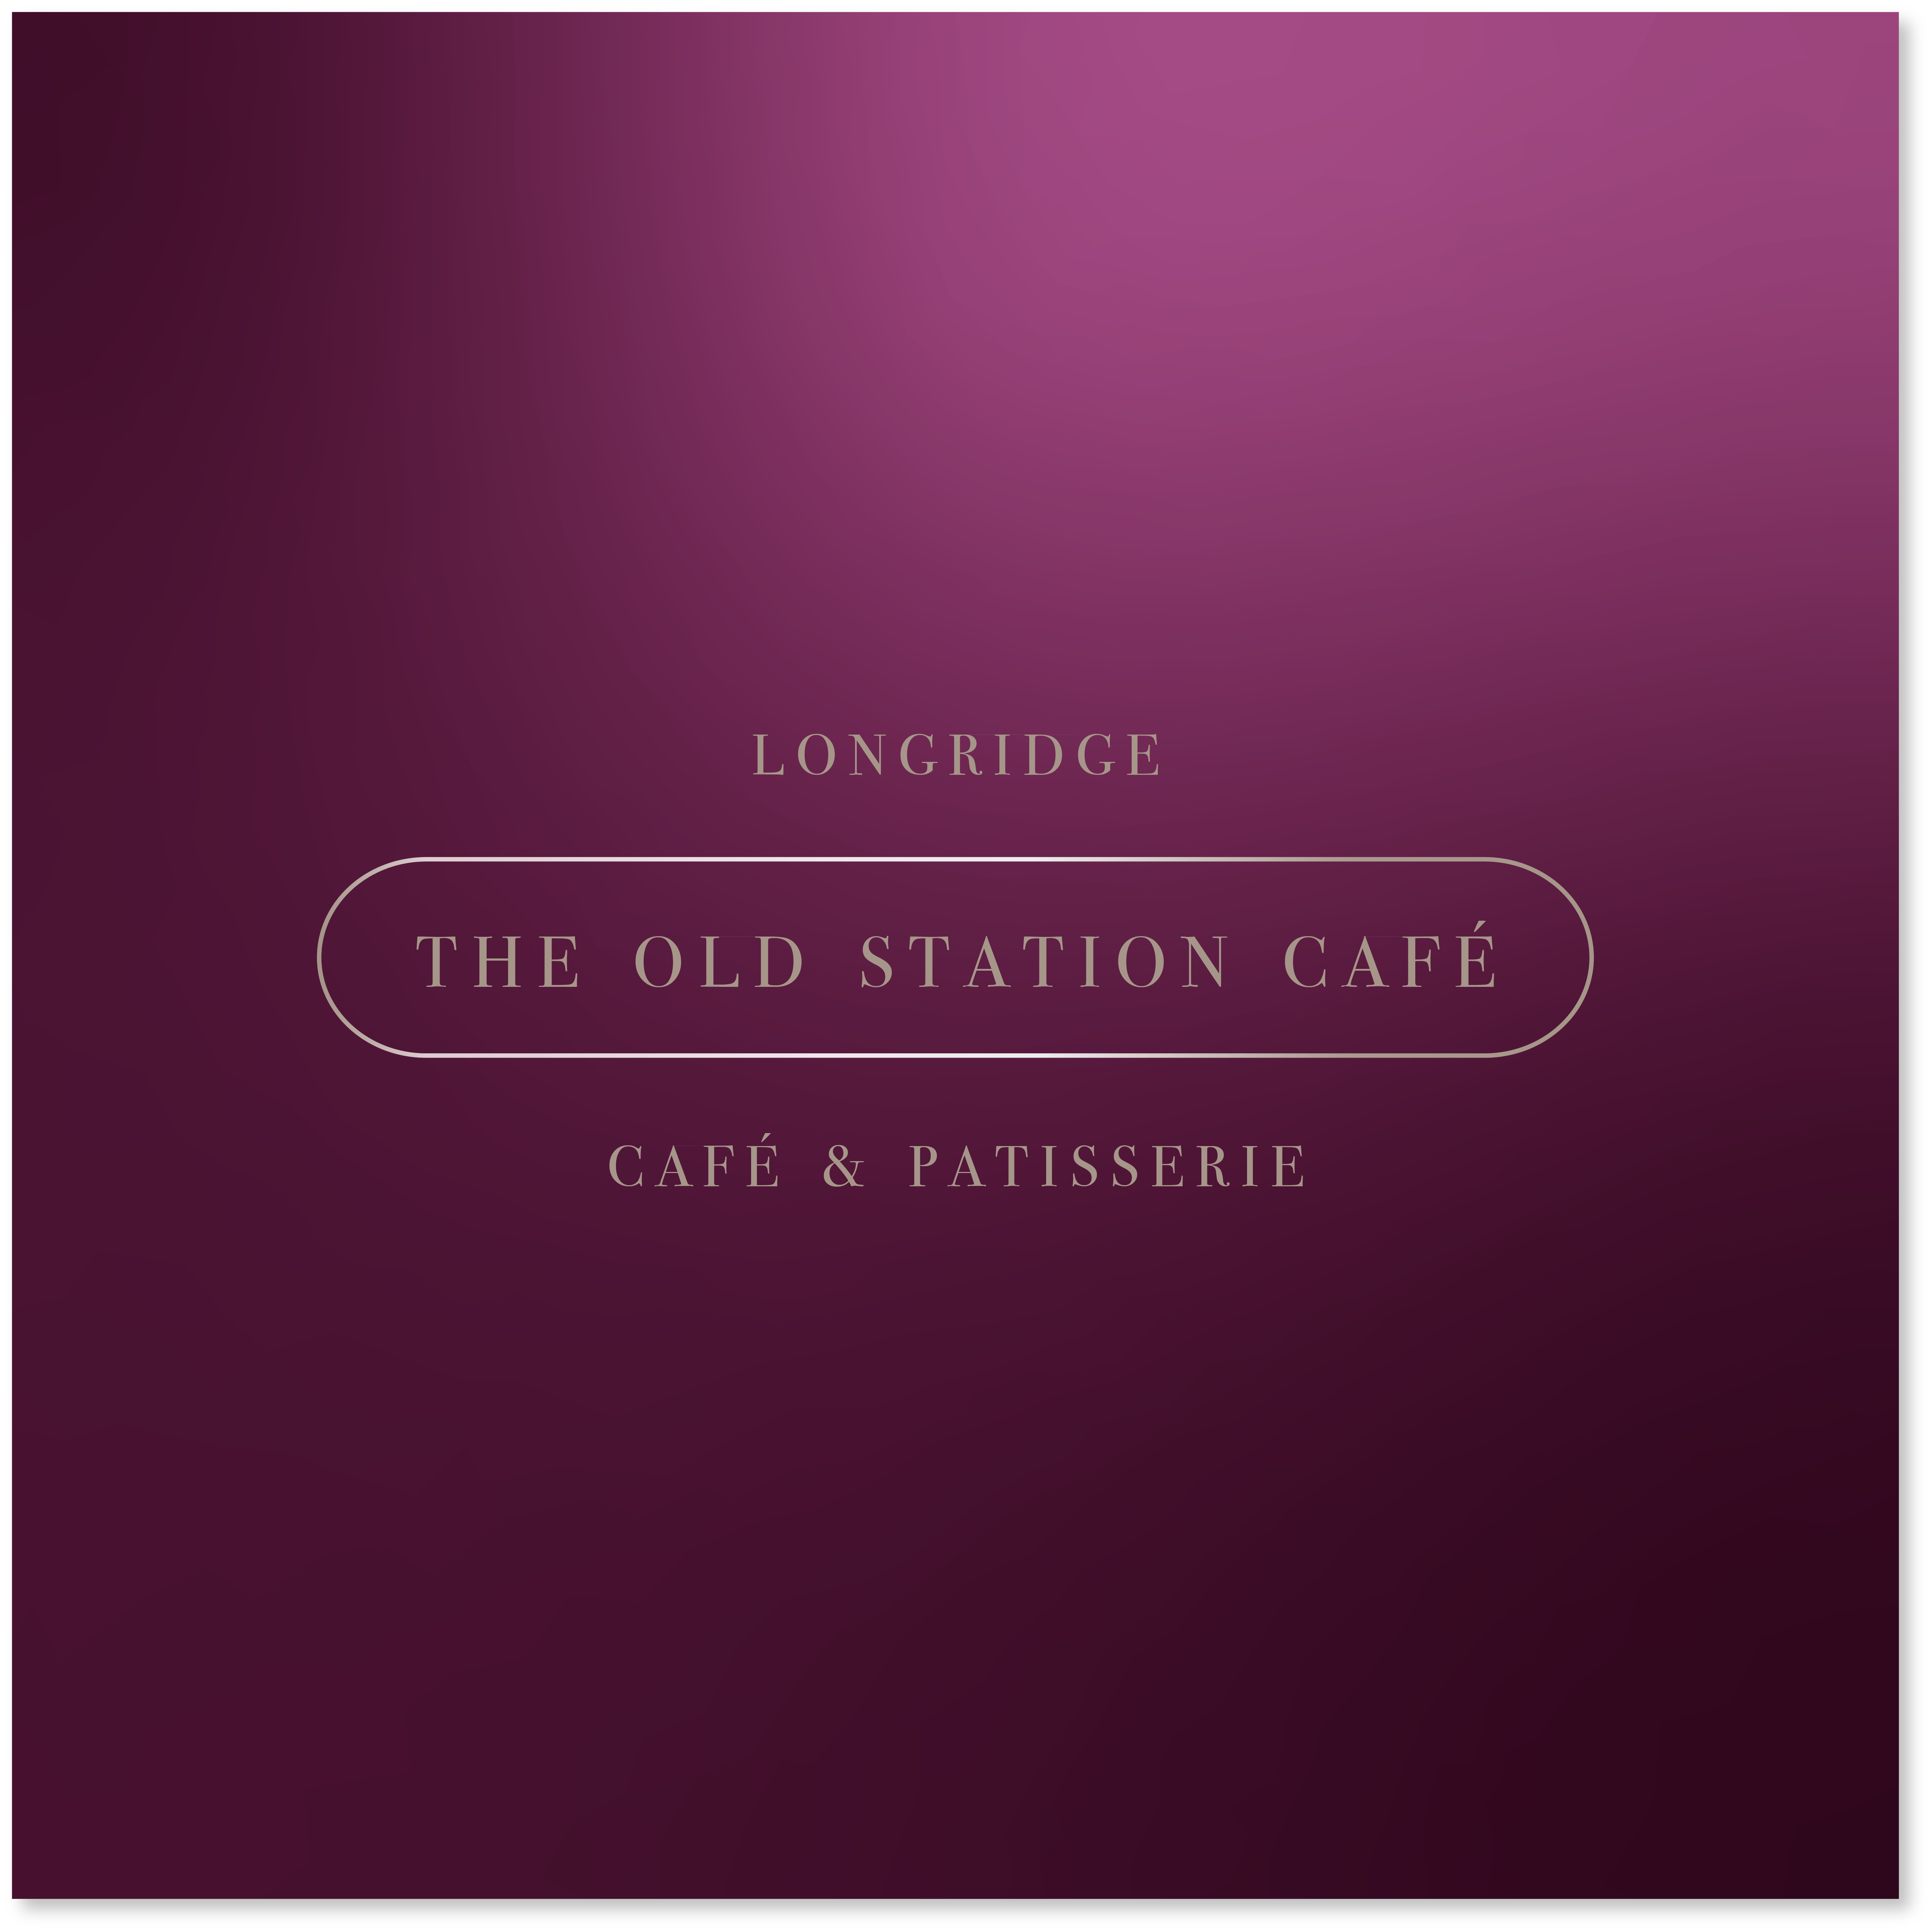 The Old Station Cafe